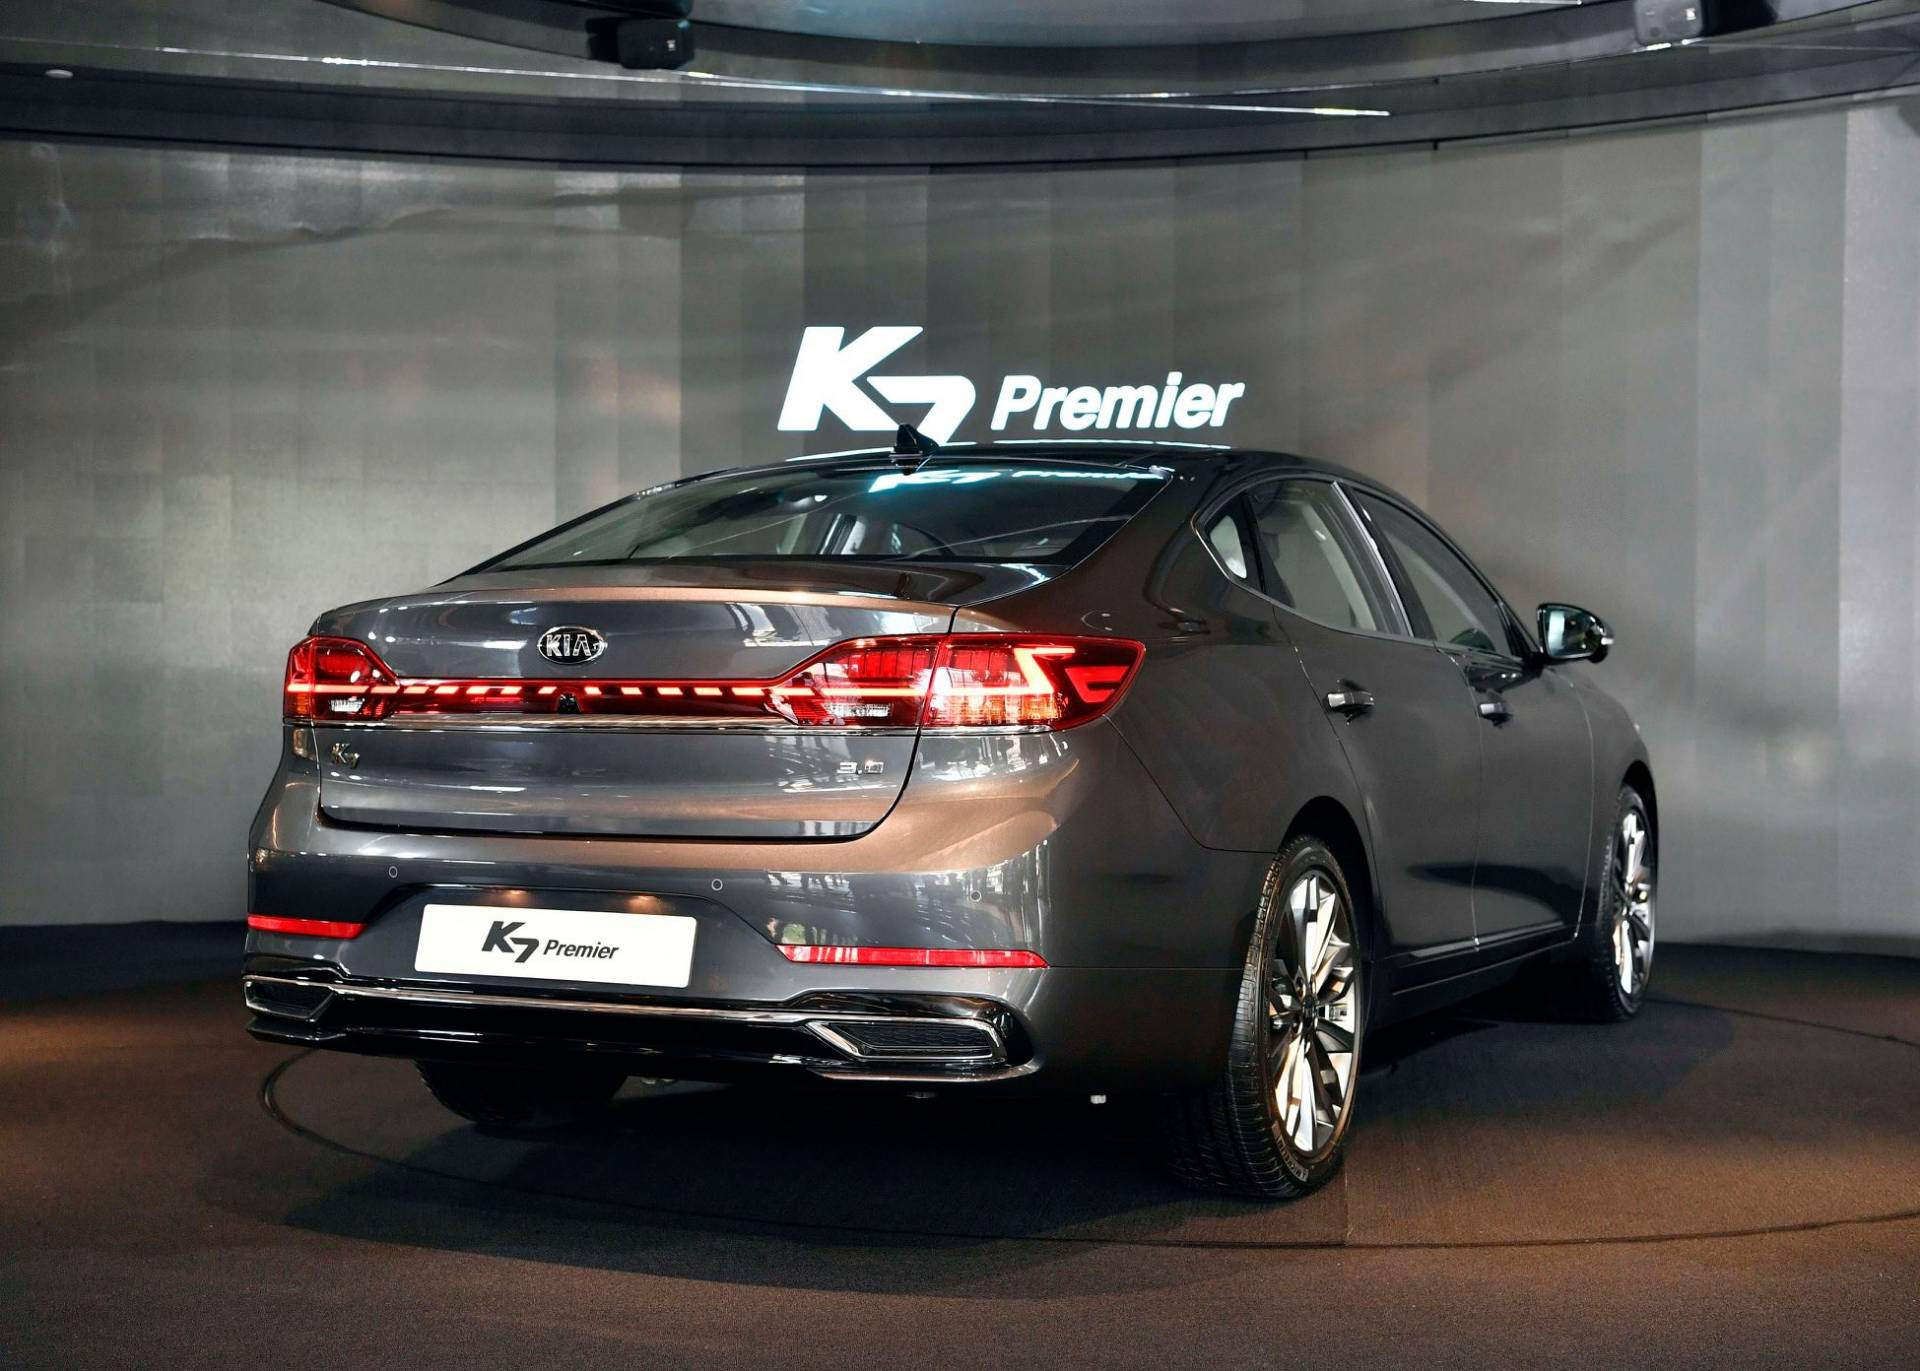 Facelifted 2020 Kia Cadenza Breaks Cover As The K7 Premier